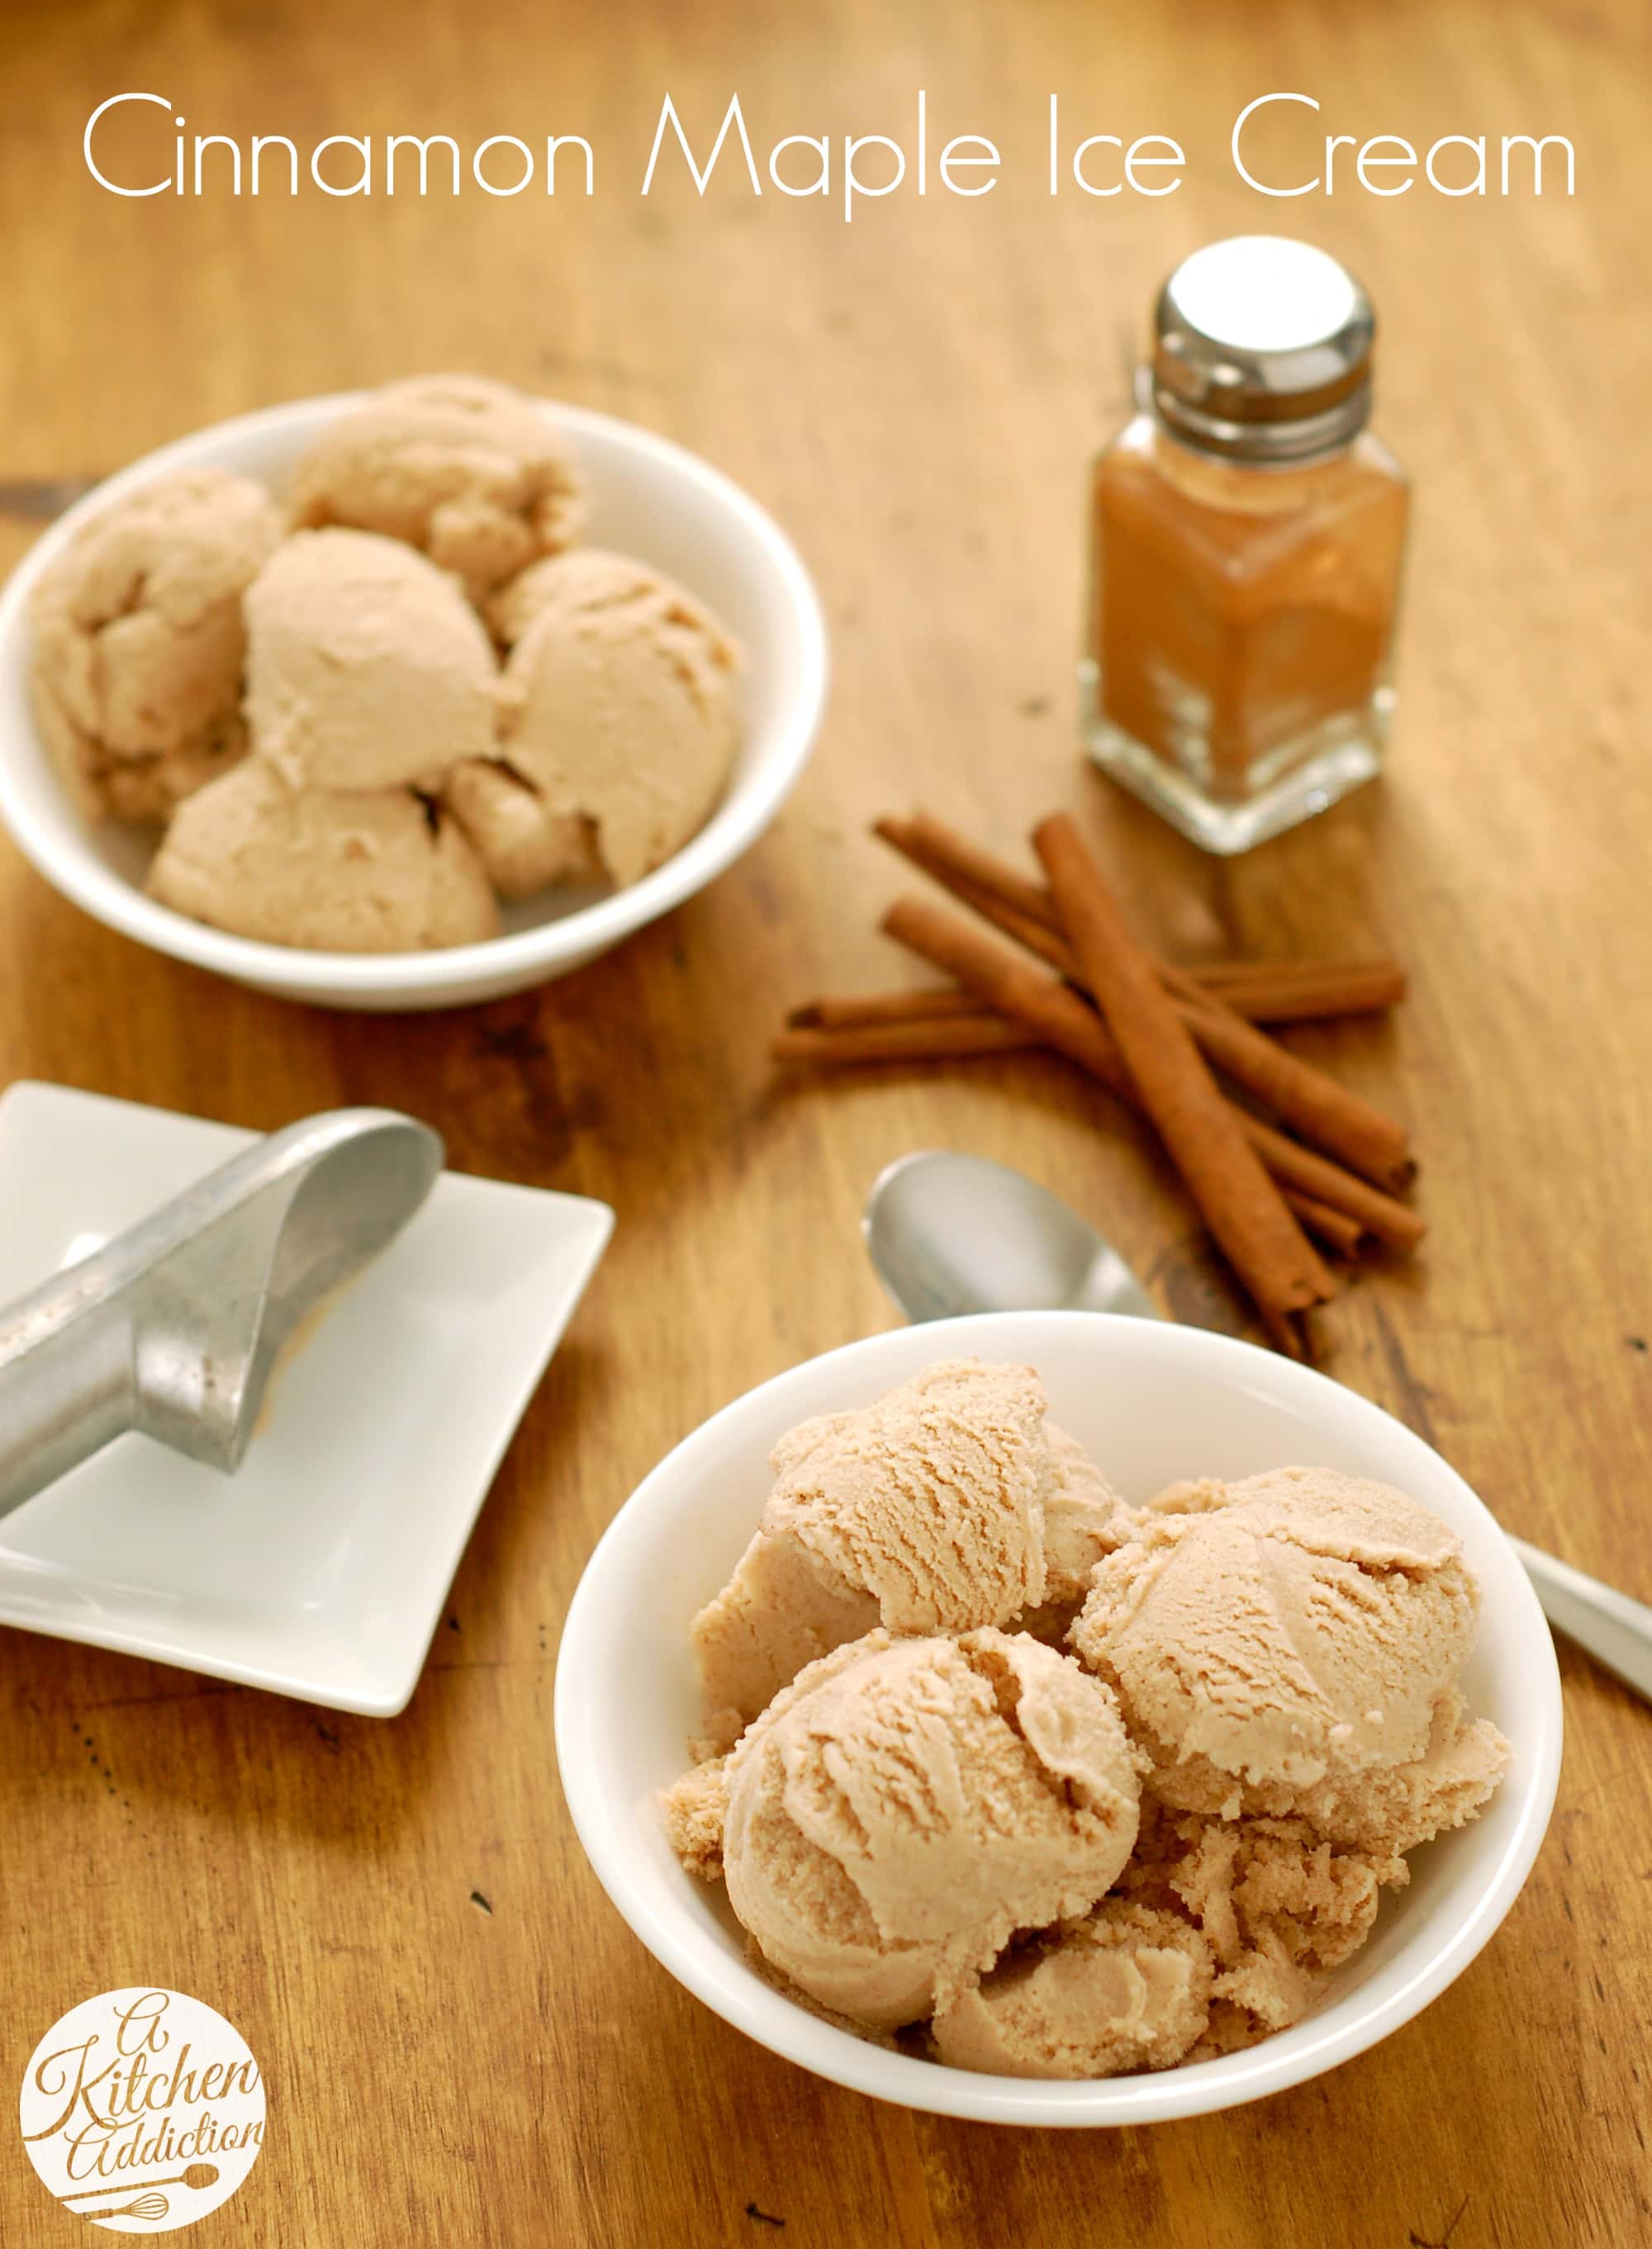 https://www.a-kitchen-addiction.com/wp-content/uploads/2013/08/maple-cinnamon-ice-cream-vert-w-words.jpg